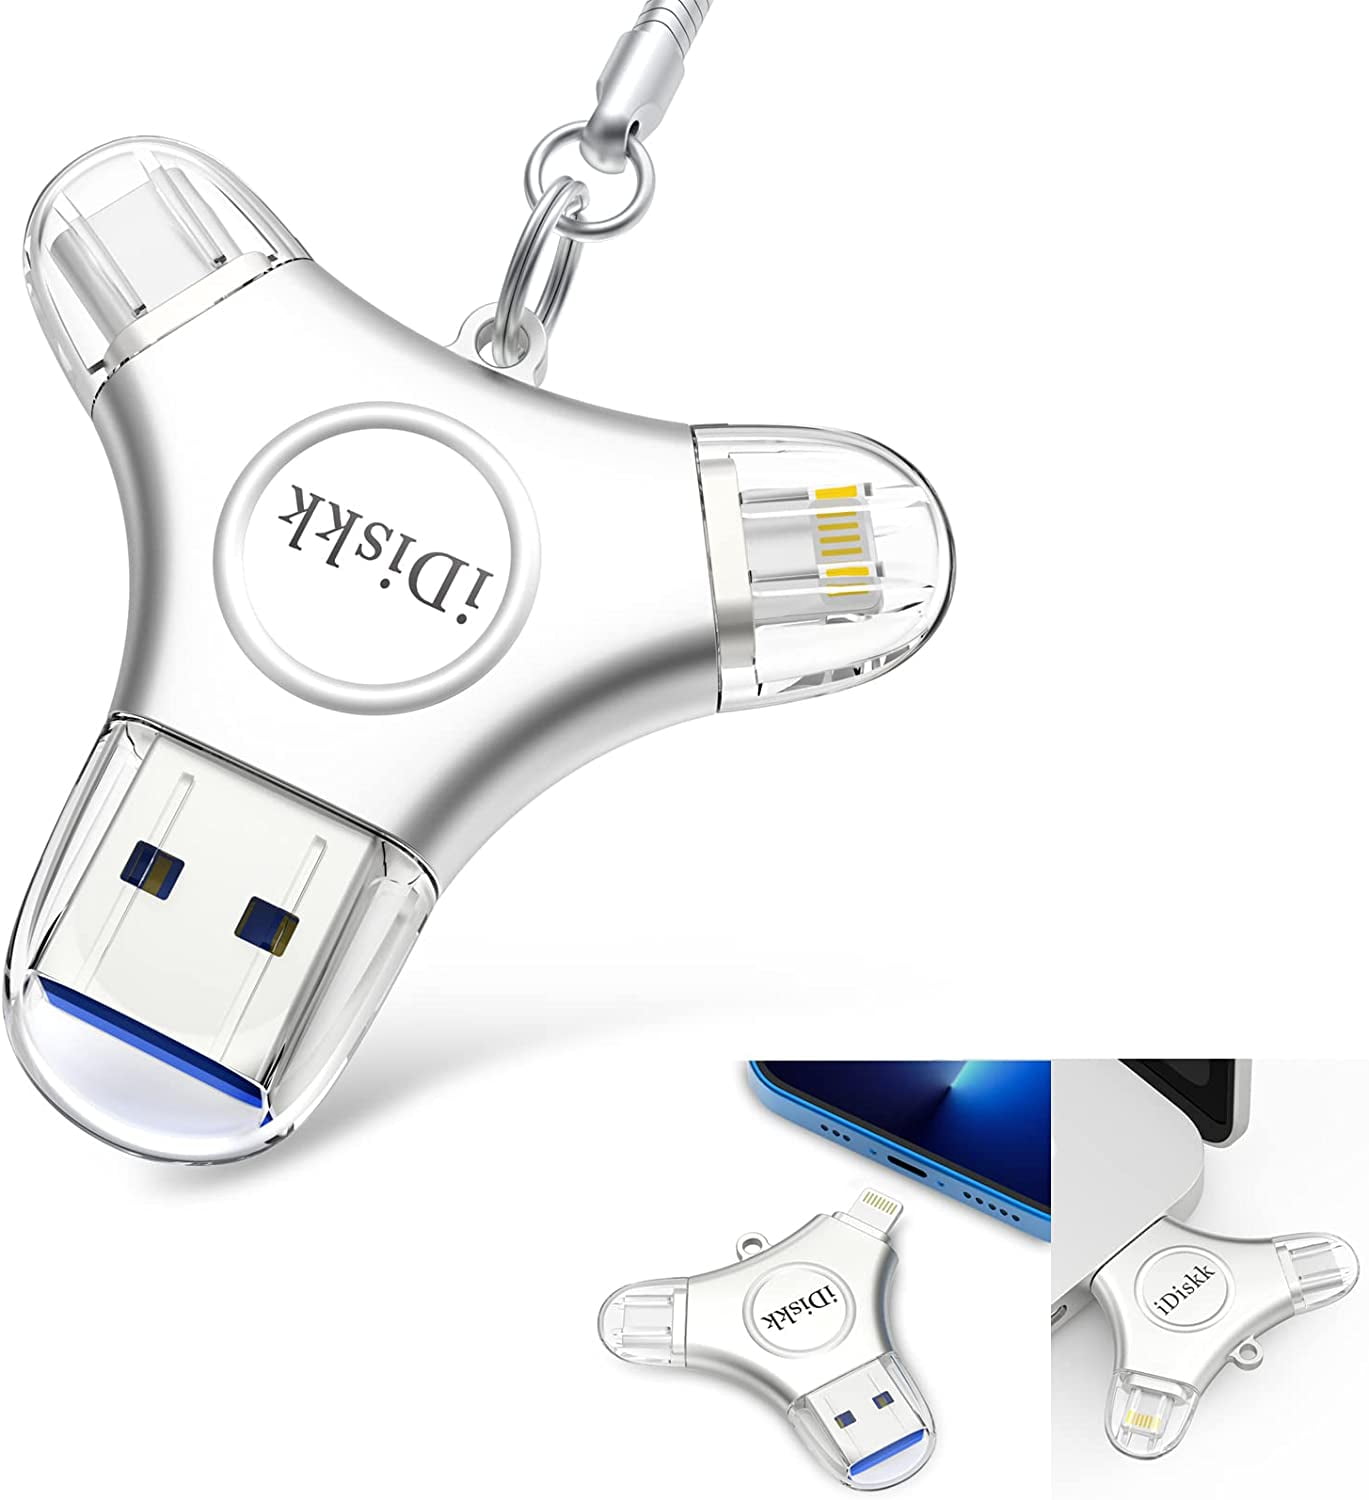 256GB Photo-Stick-for-iPhone, Apple MFi Cetified USB Flash Drive